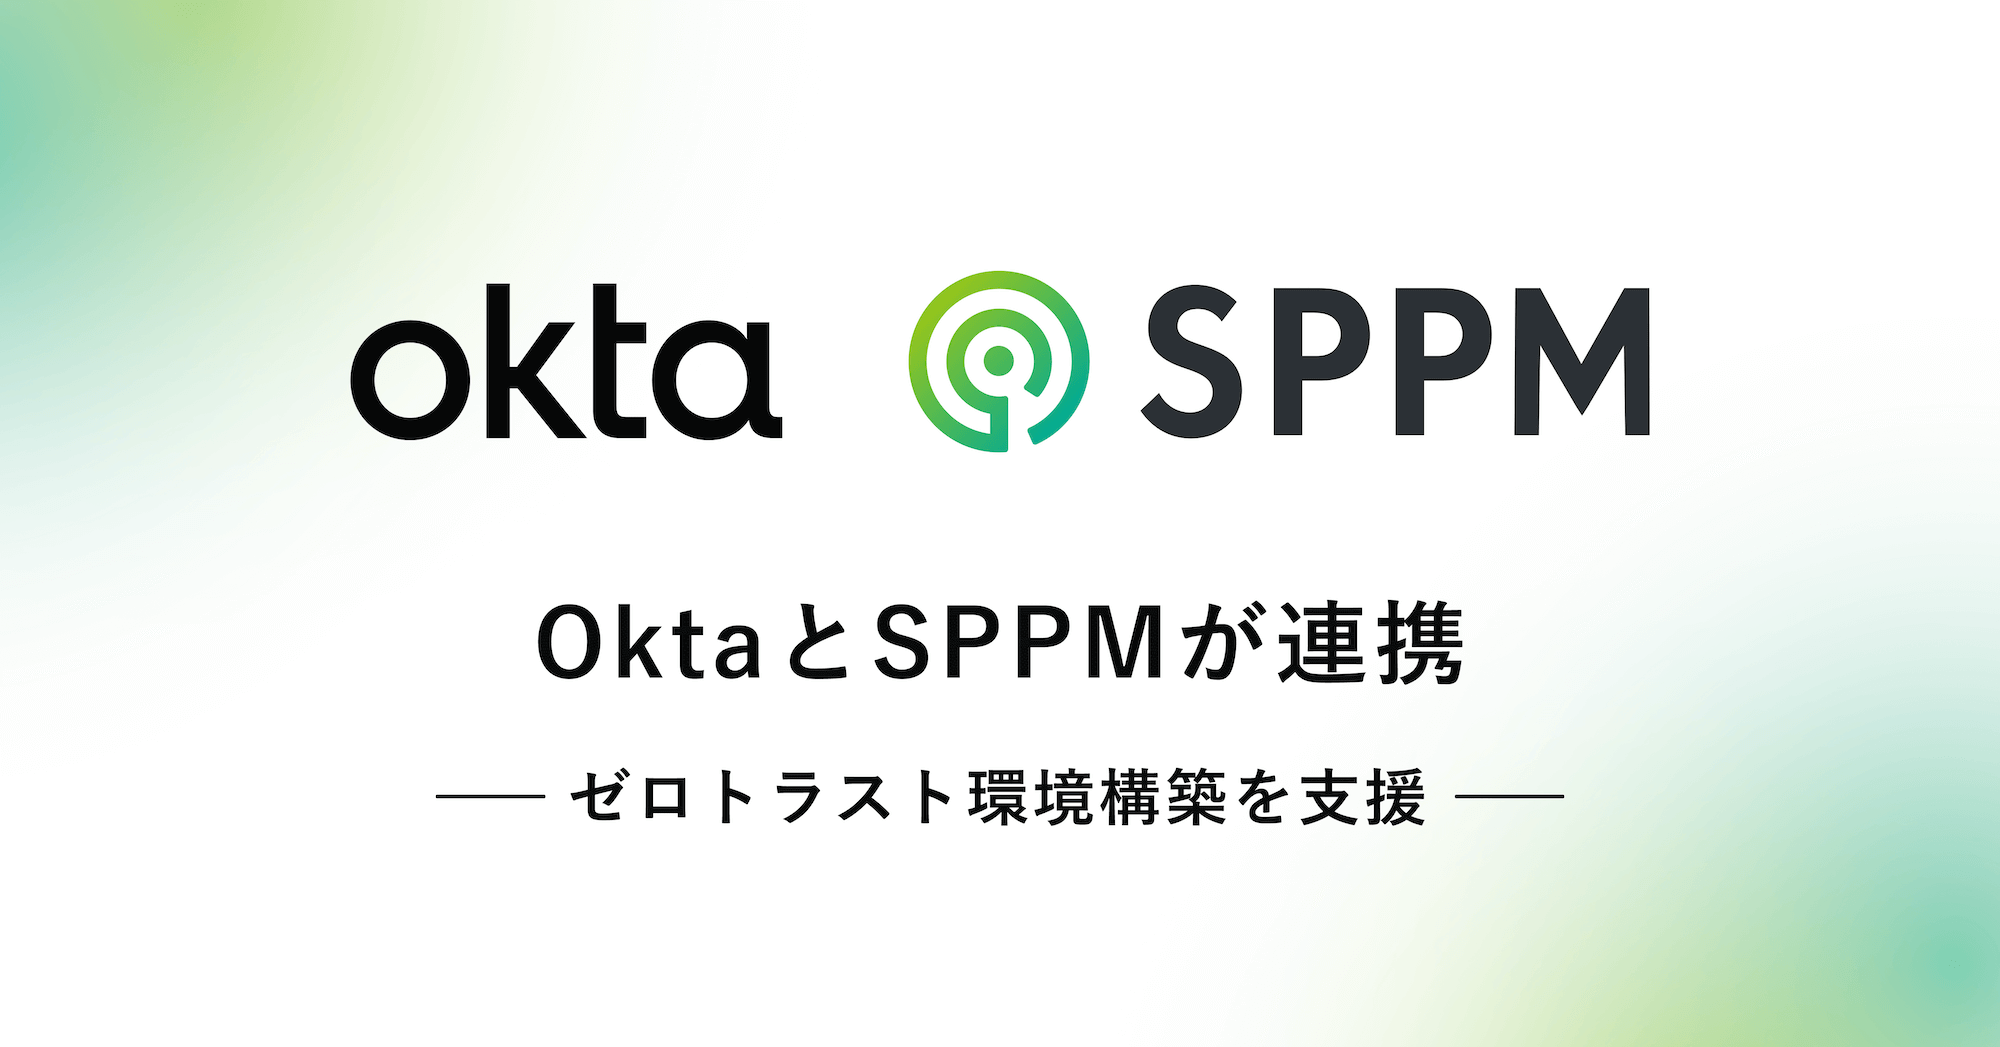 SPPMとOktaのロゴ